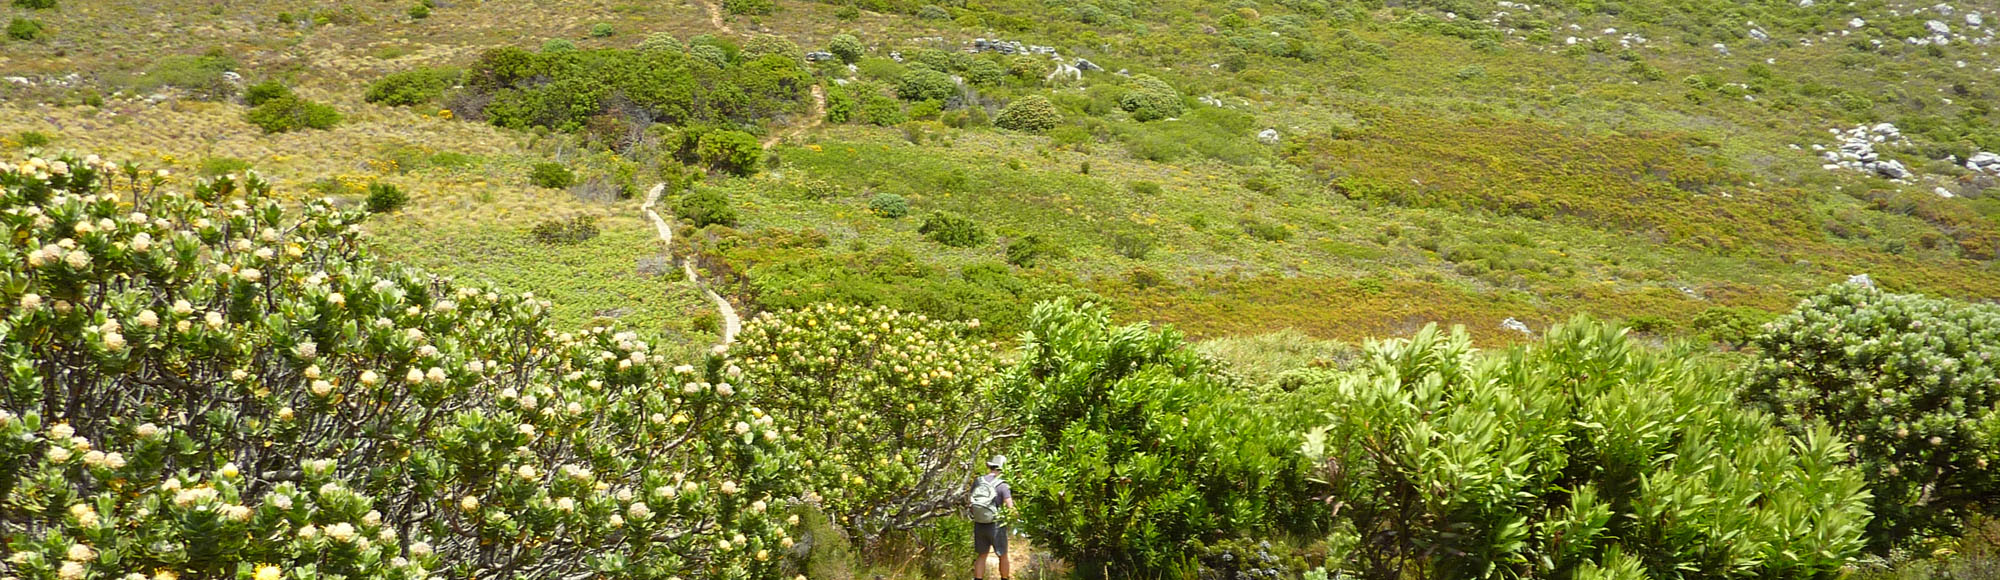 Table Mountain hike 01i